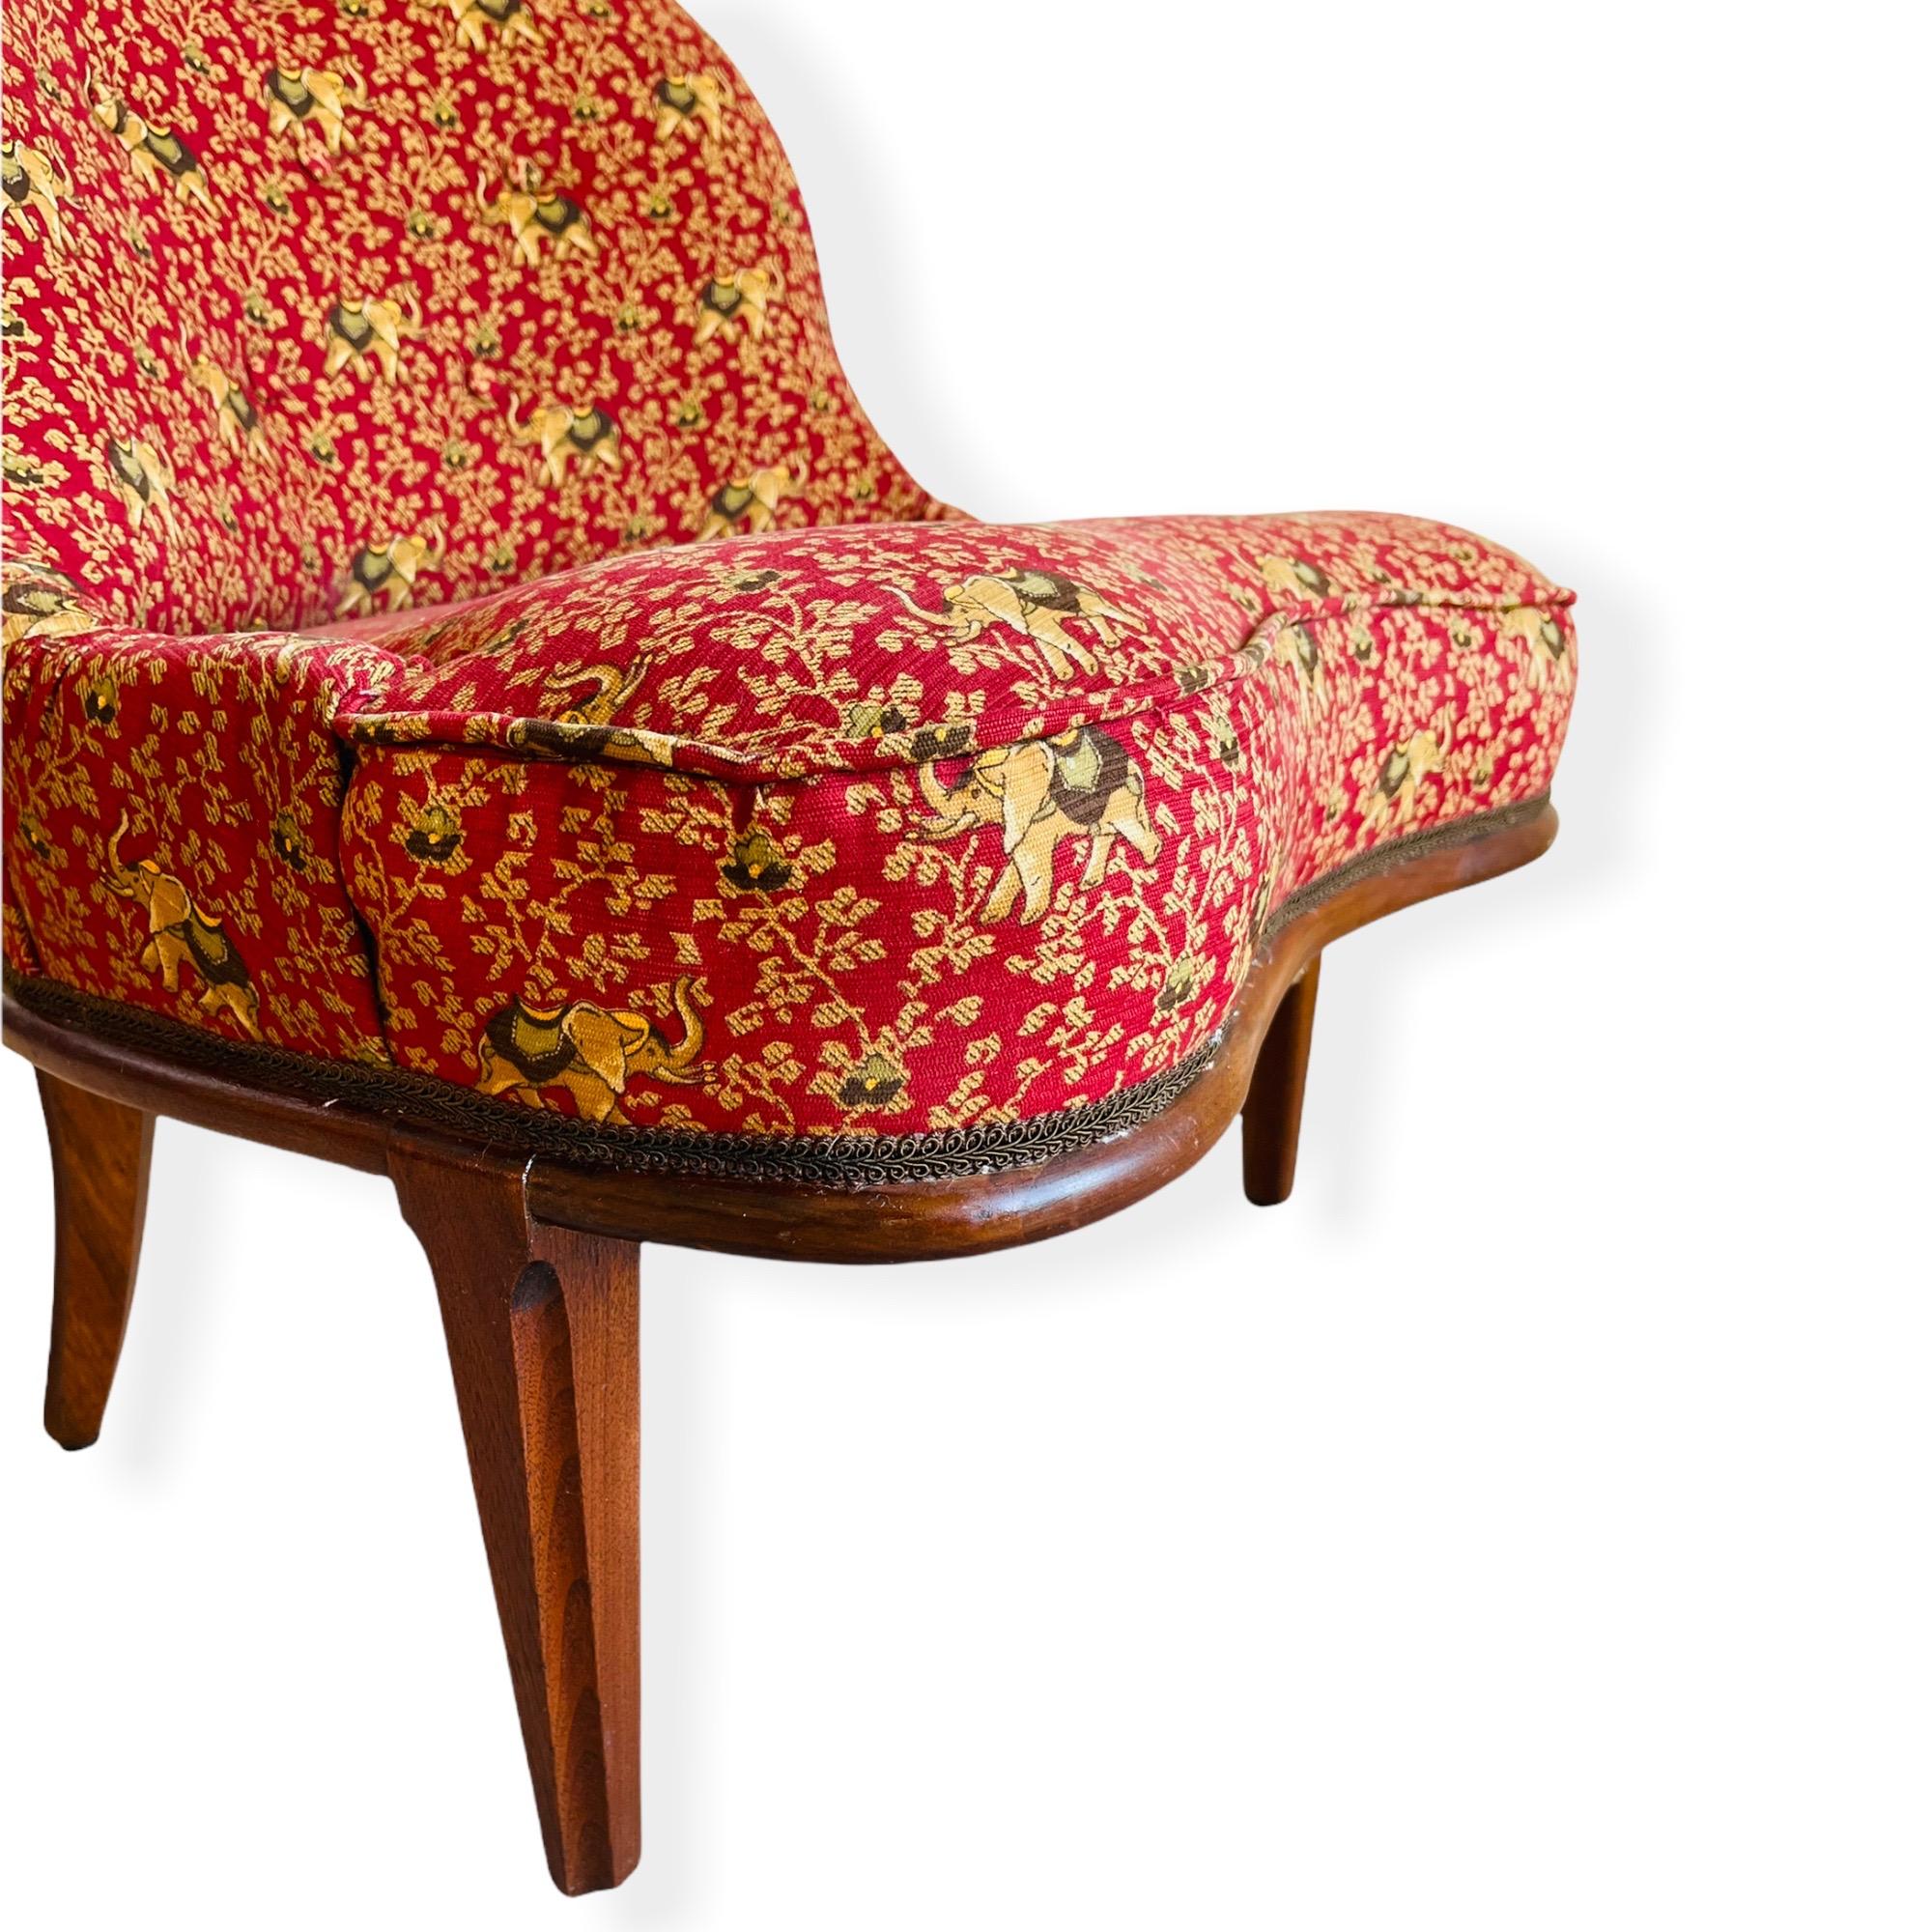 20th Century Rare Edward Wormley for Dunbar Janus Slipper Chair